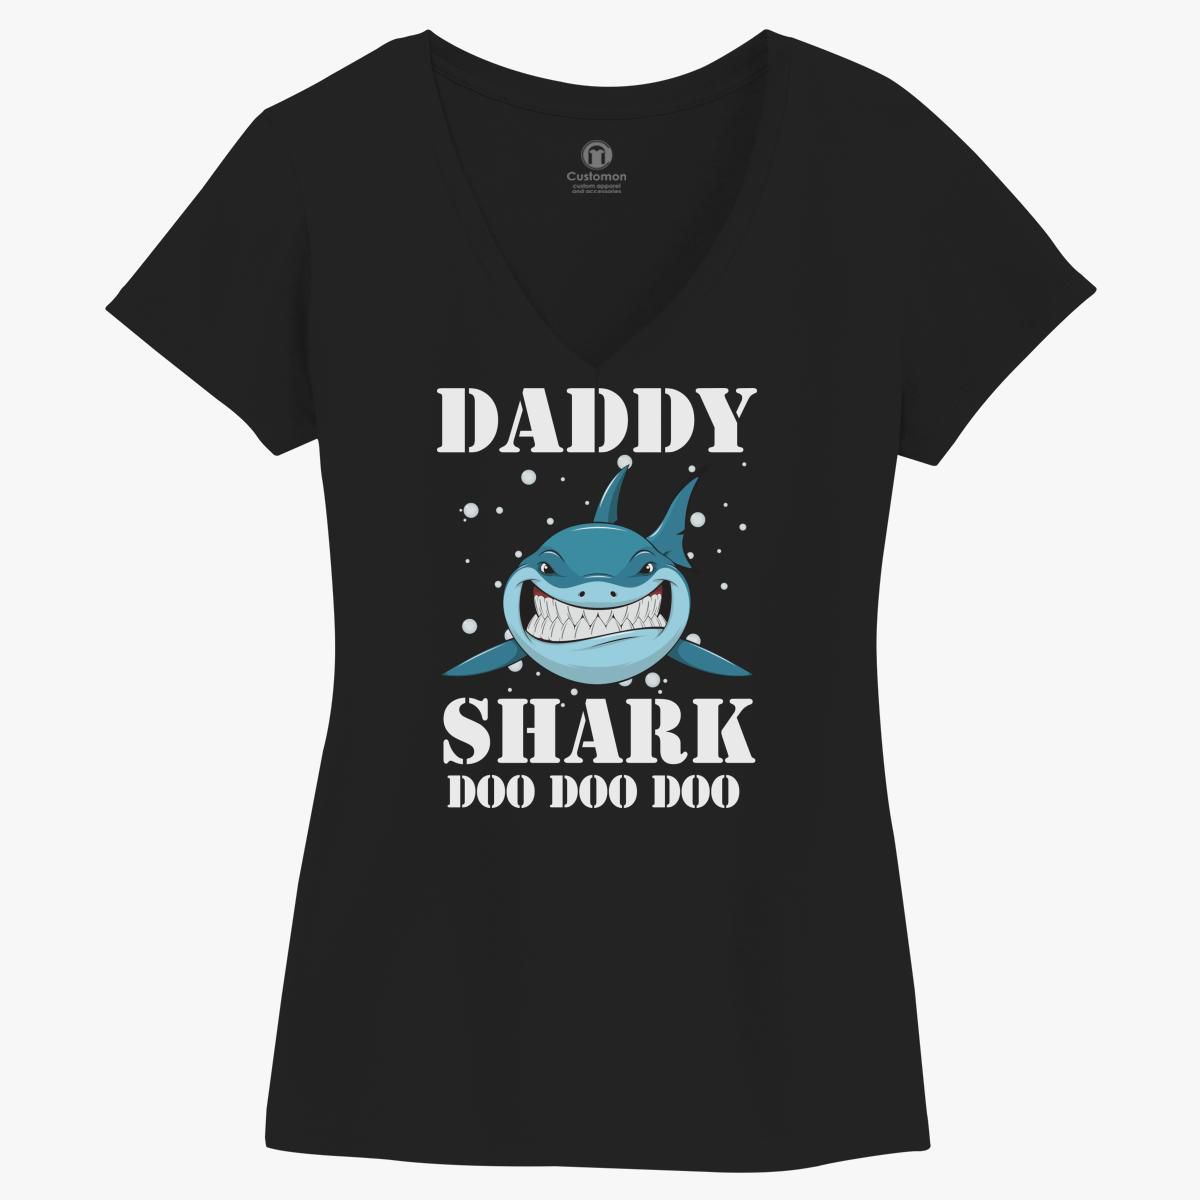 Download Daddy-Shark Women's V-Neck T-shirt - Customon